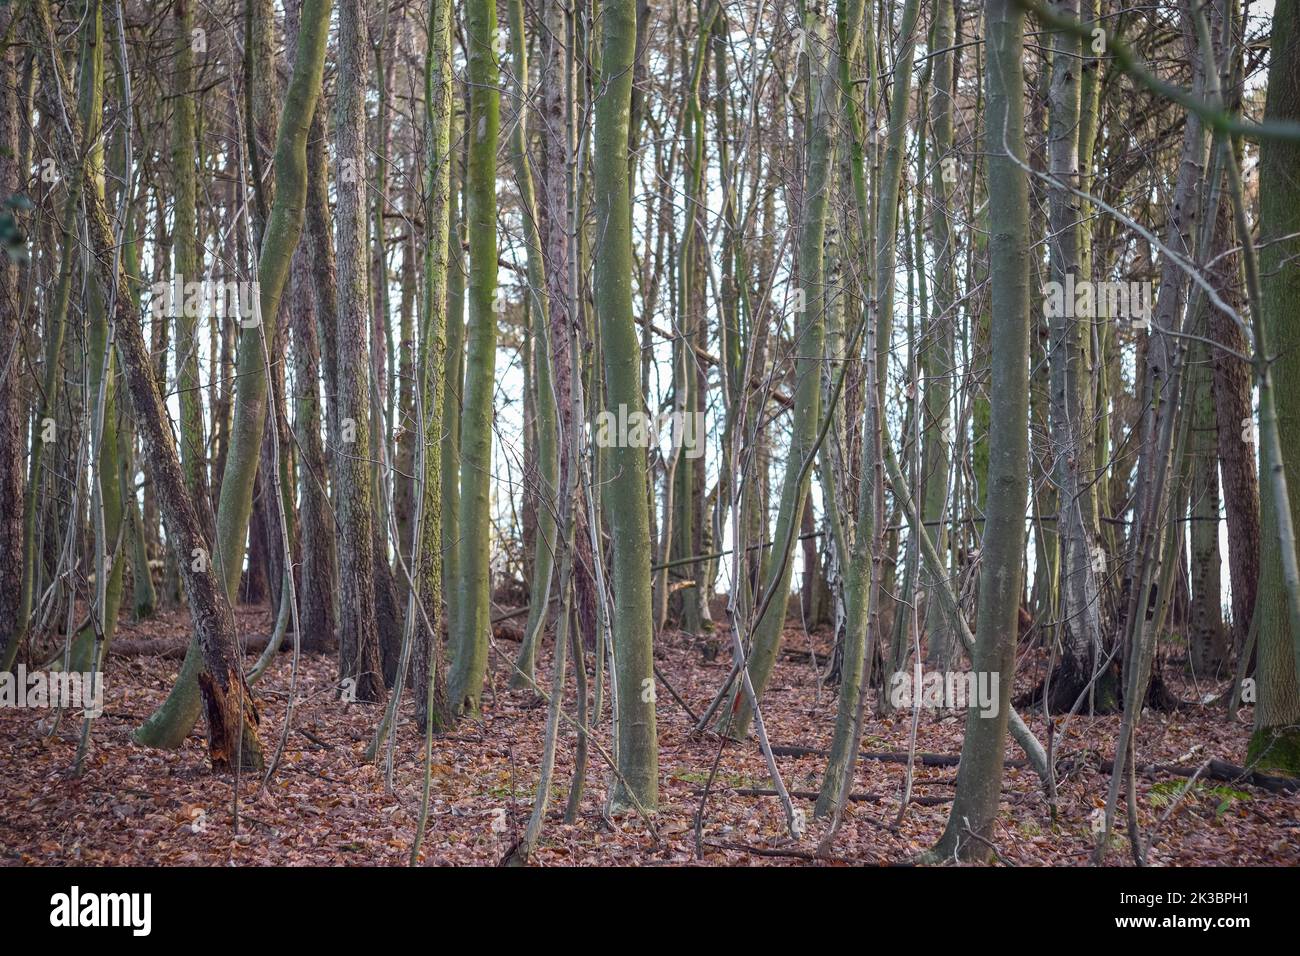 Bare trees background. Sherrardspark Wood in Welwyn Garden City, Hertfordshire, England Stock Photo